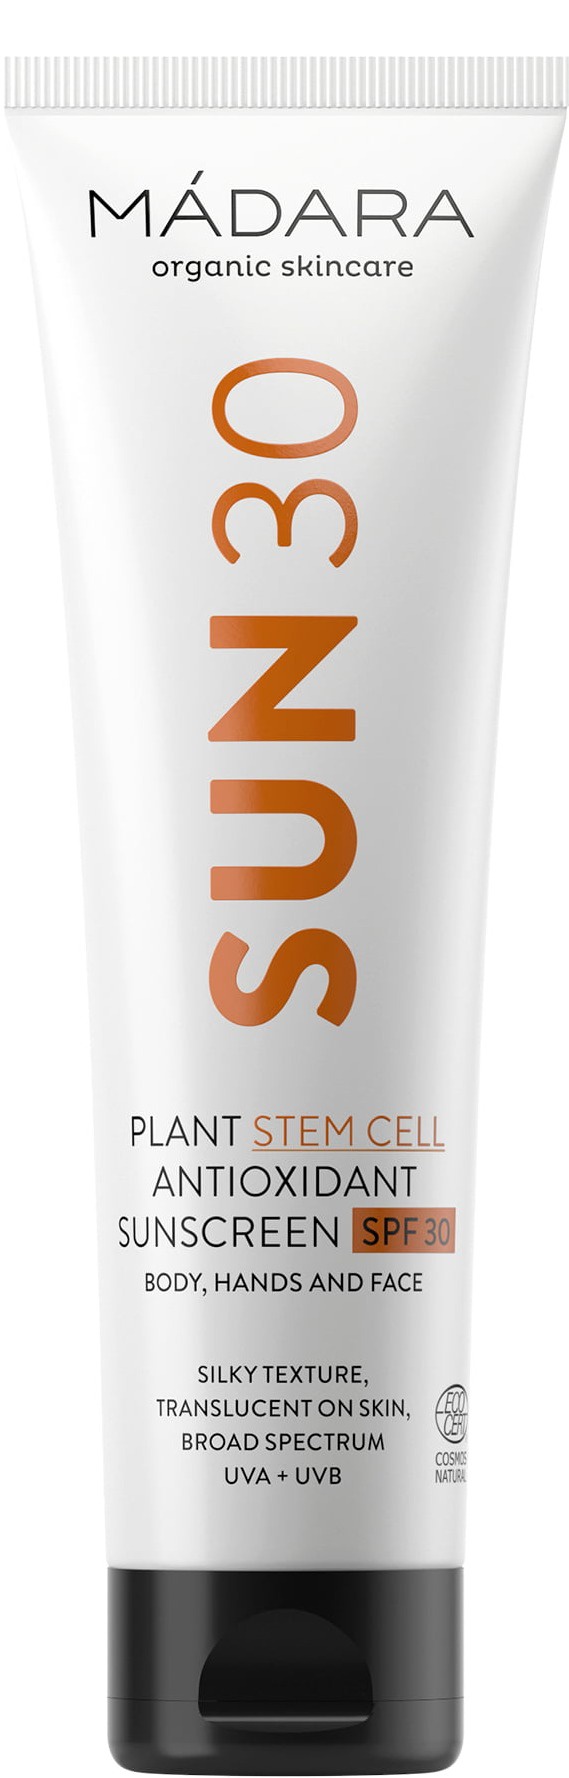 Madara Plant Stem Cell Antioxidant Sunscreen SPF30